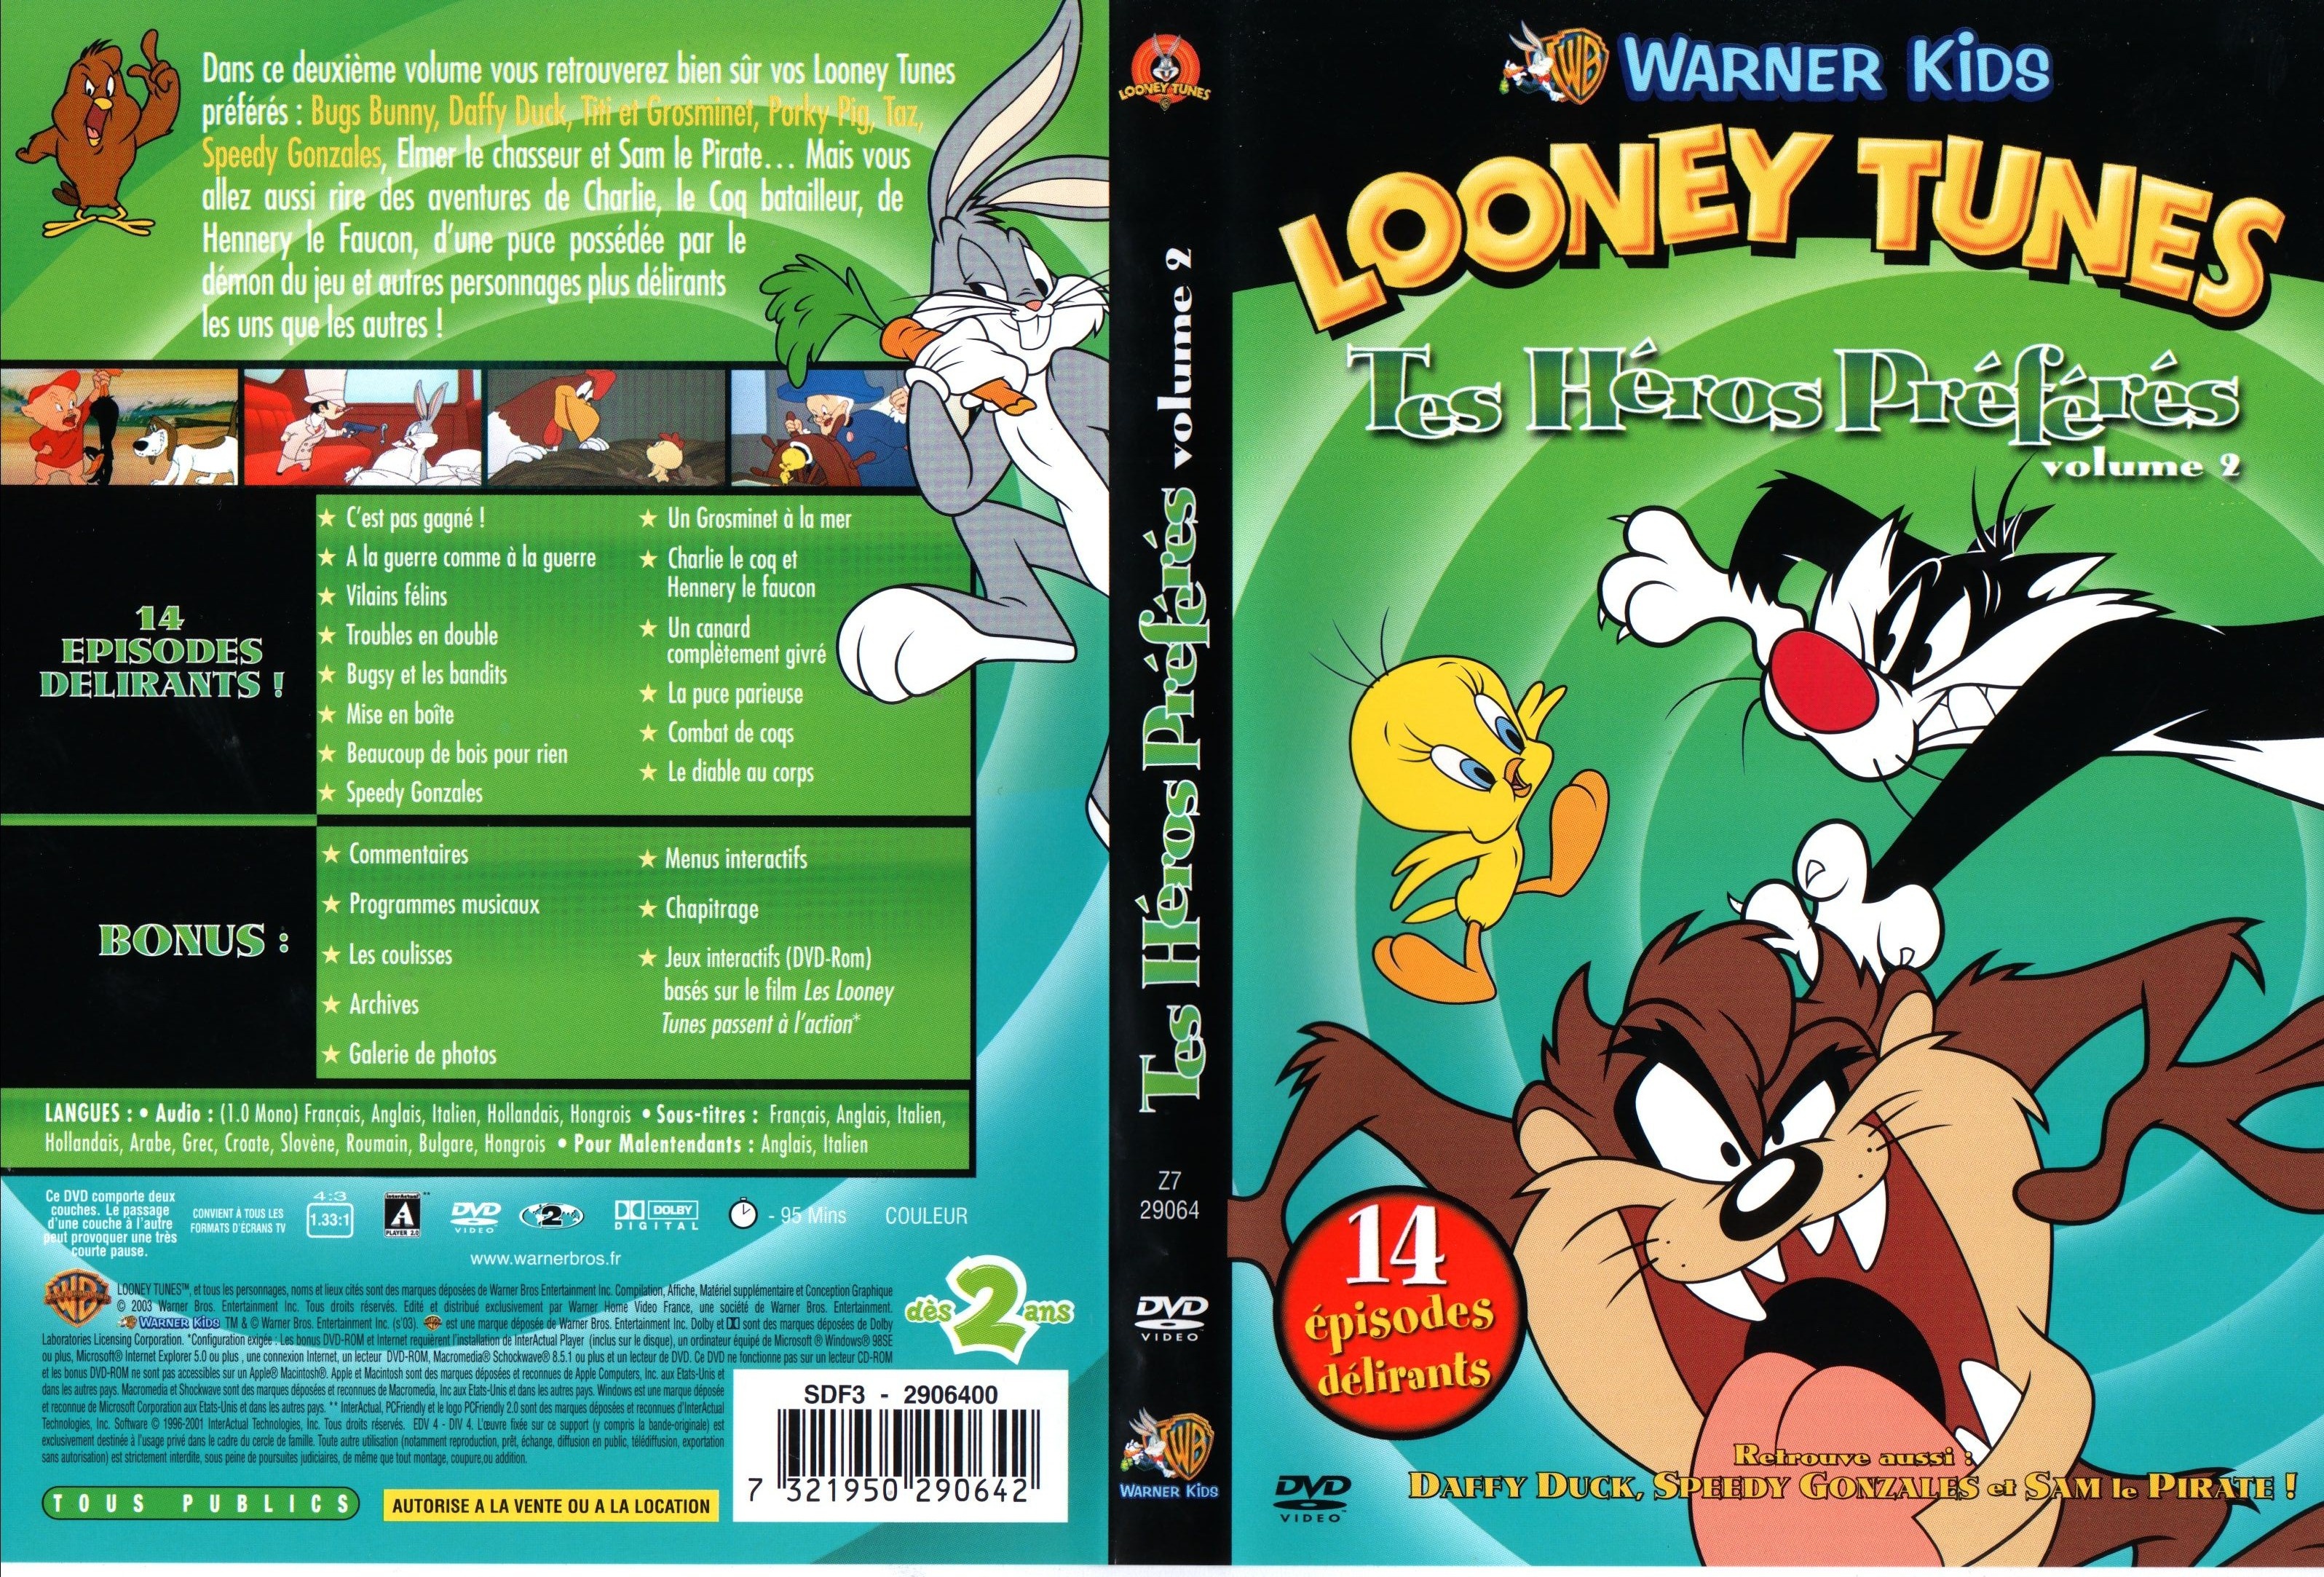 Jaquette DVD Looney Tunes - Tes heros preferes vol 2